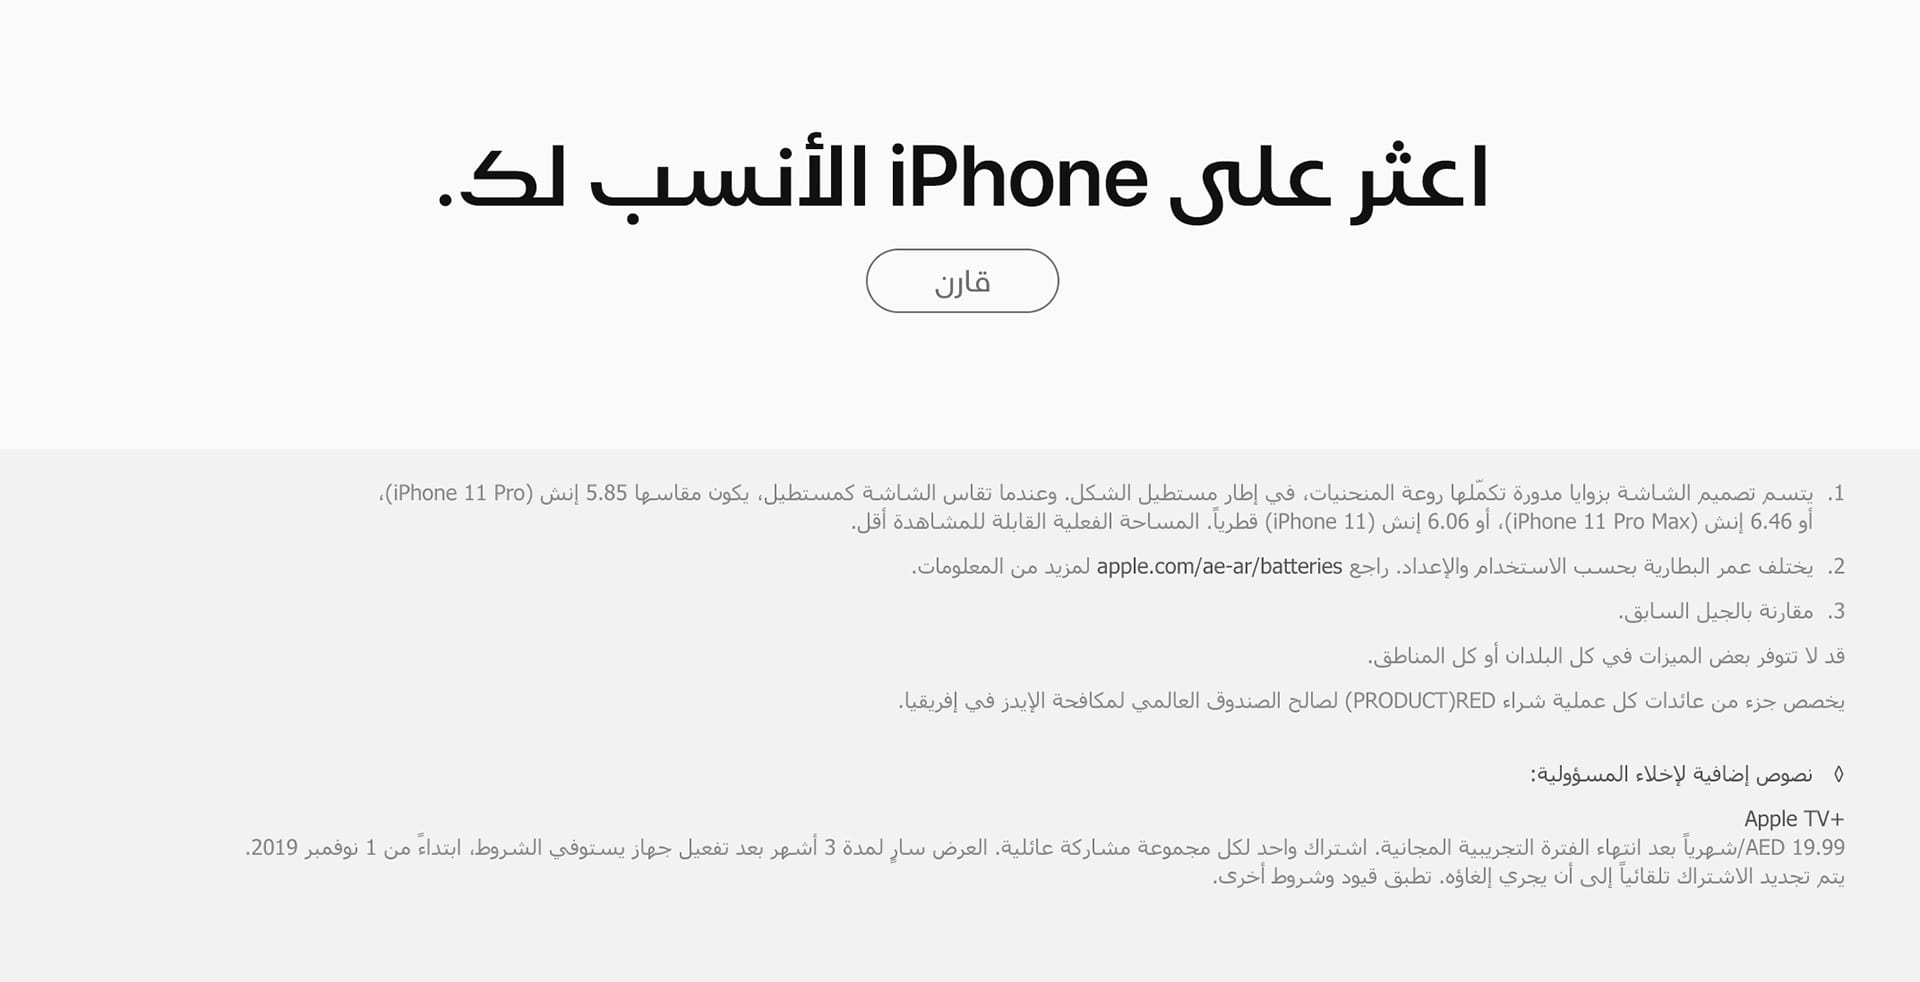 apple-iphone11-pro-max-price-etisalat-uae-overview-6-ar